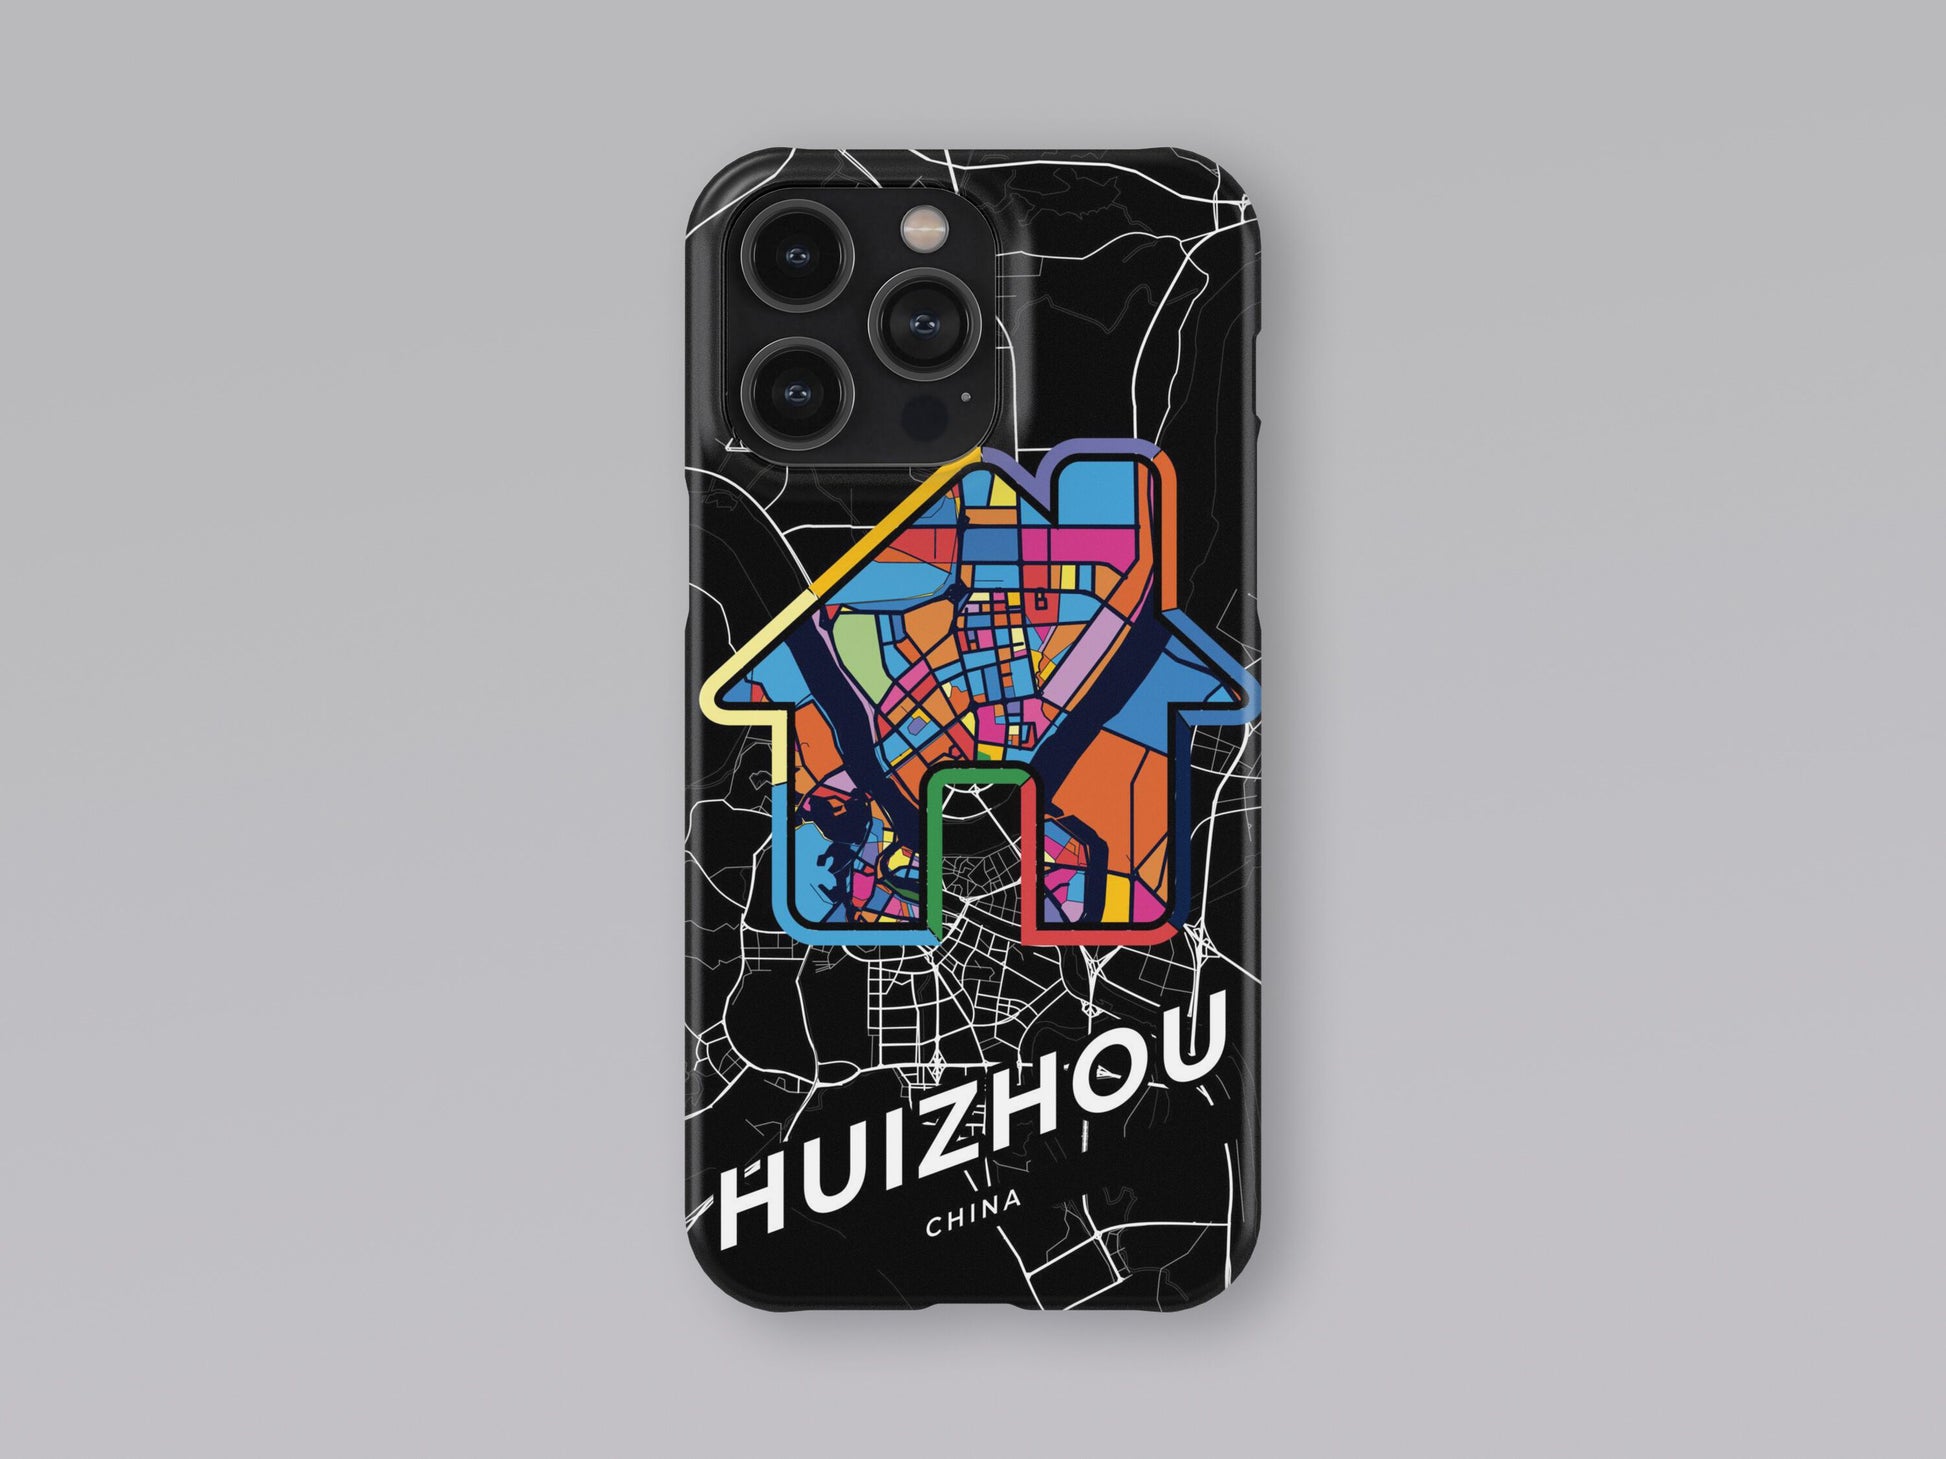 Huizhou China slim phone case with colorful icon. Birthday, wedding or housewarming gift. Couple match cases. 3